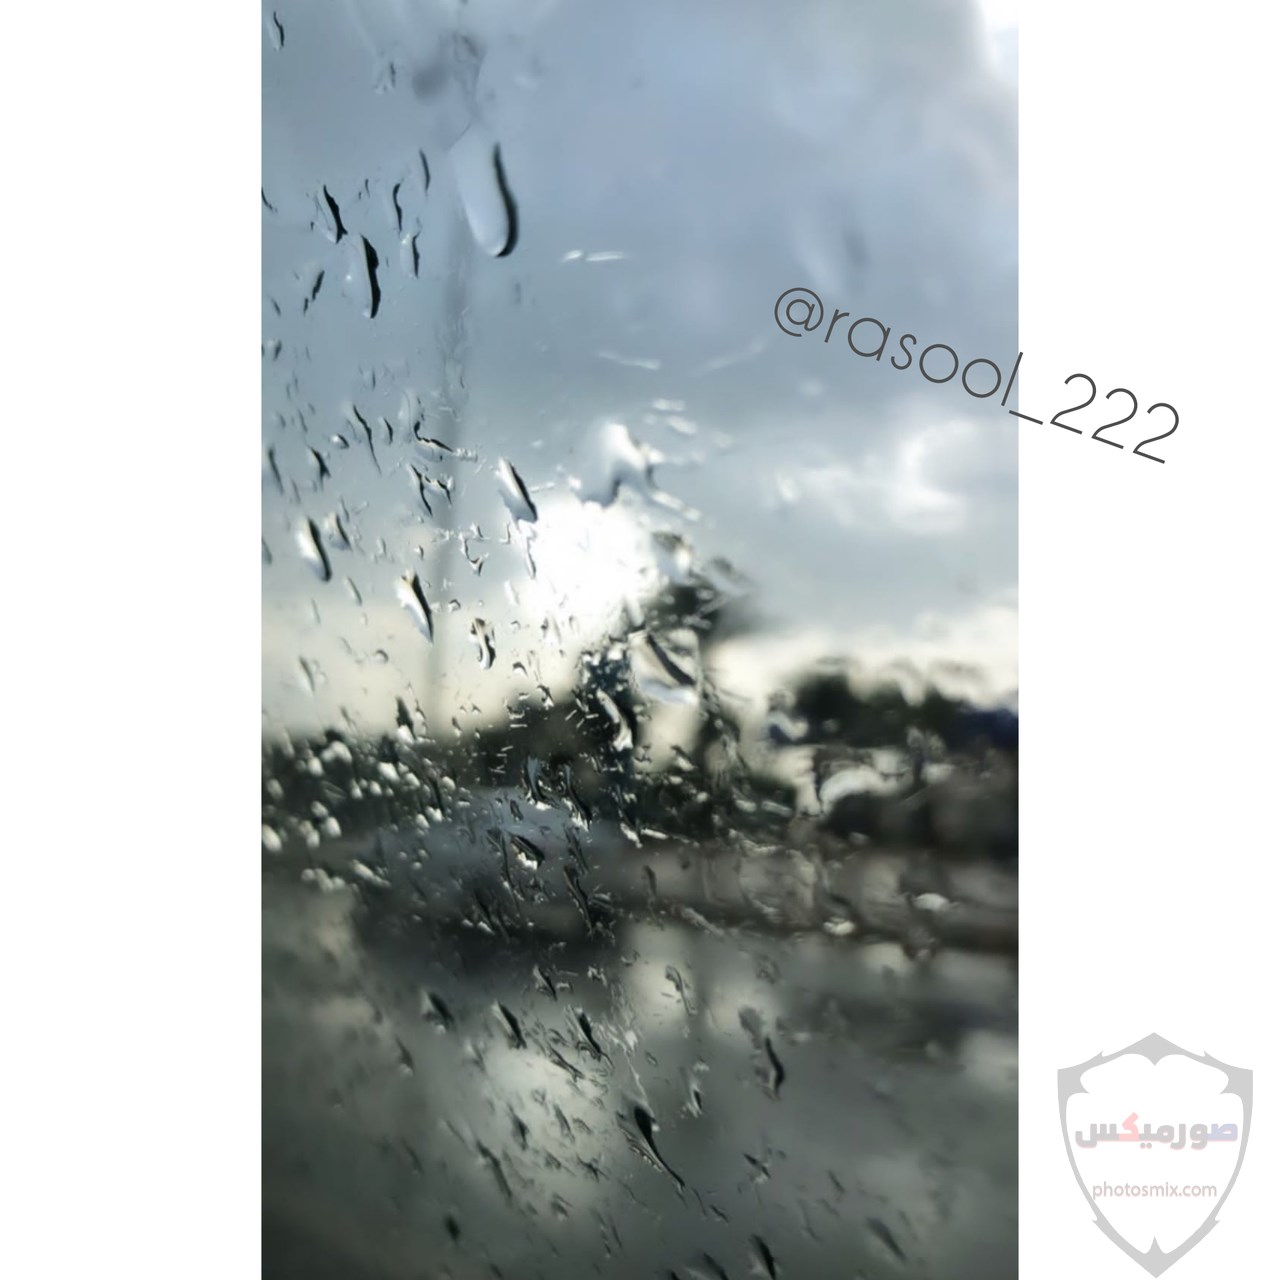 صور مطر جديدة 2020 photos rain خلفيات مطر 6 1